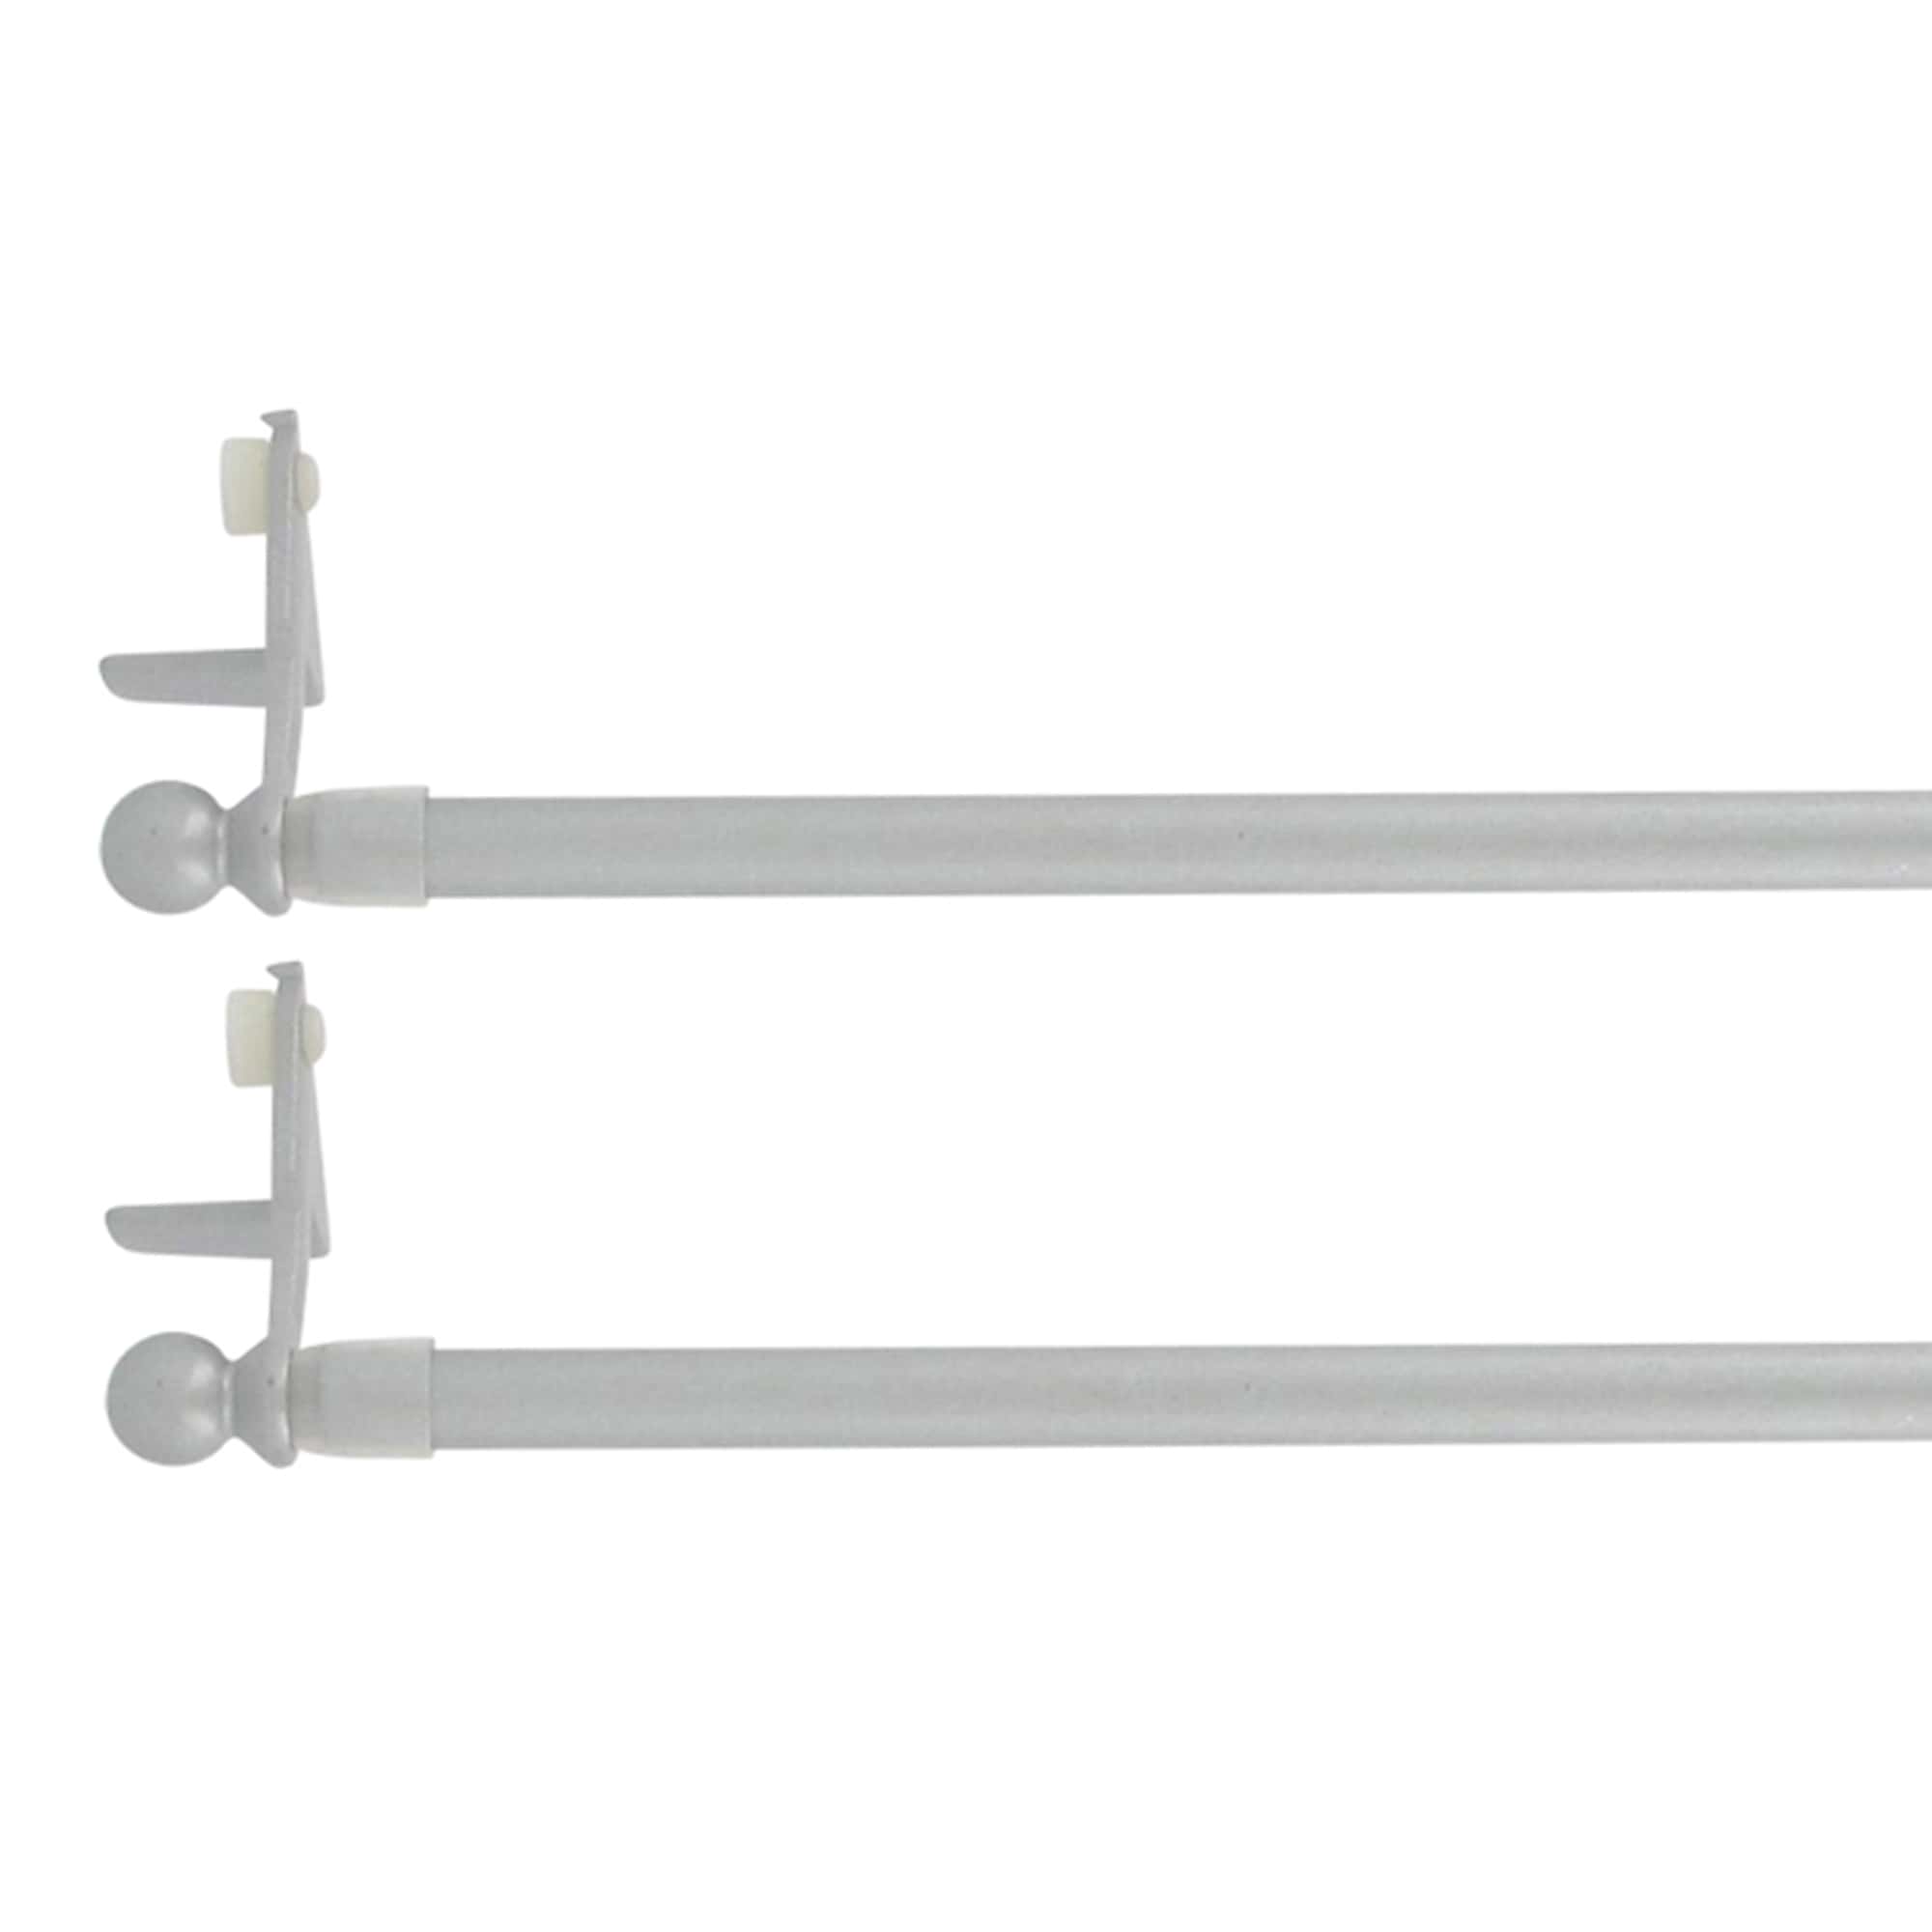 Set of 2 Silver Adjustable Tension Rods 20"